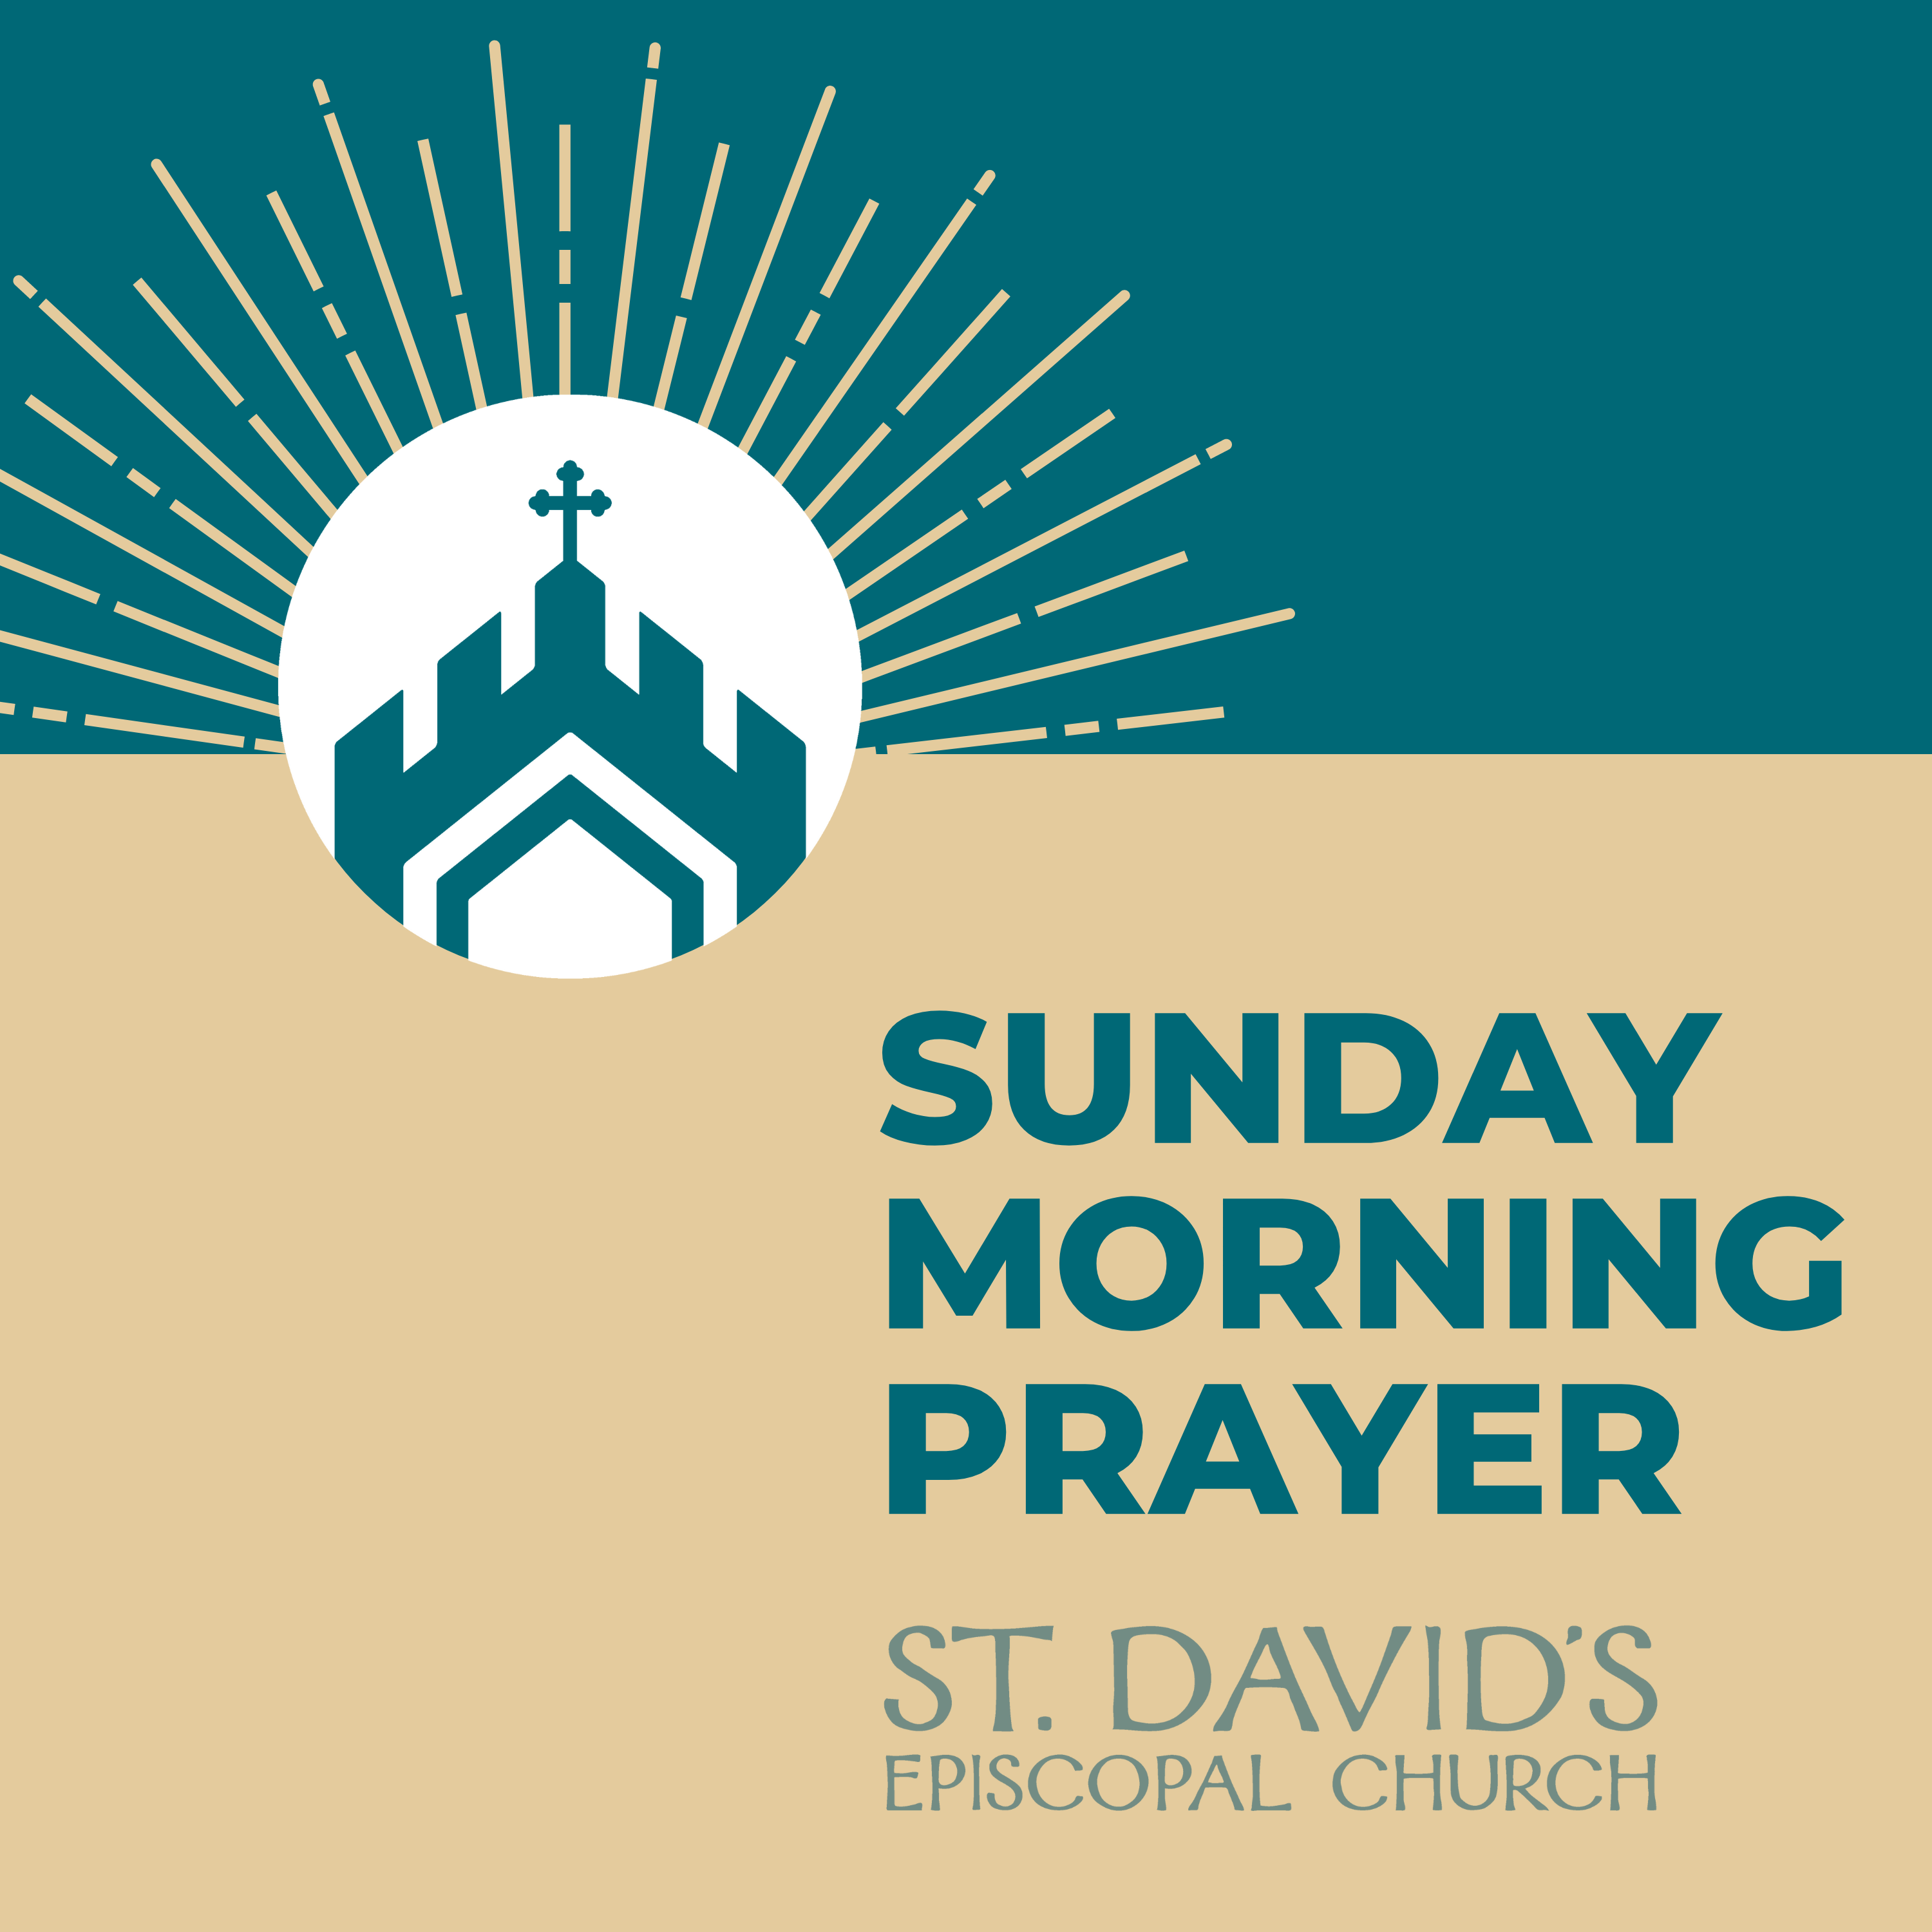 Sunday Morning Prayer: Rite Two, Year 2, 20th Sunday after Pentecost